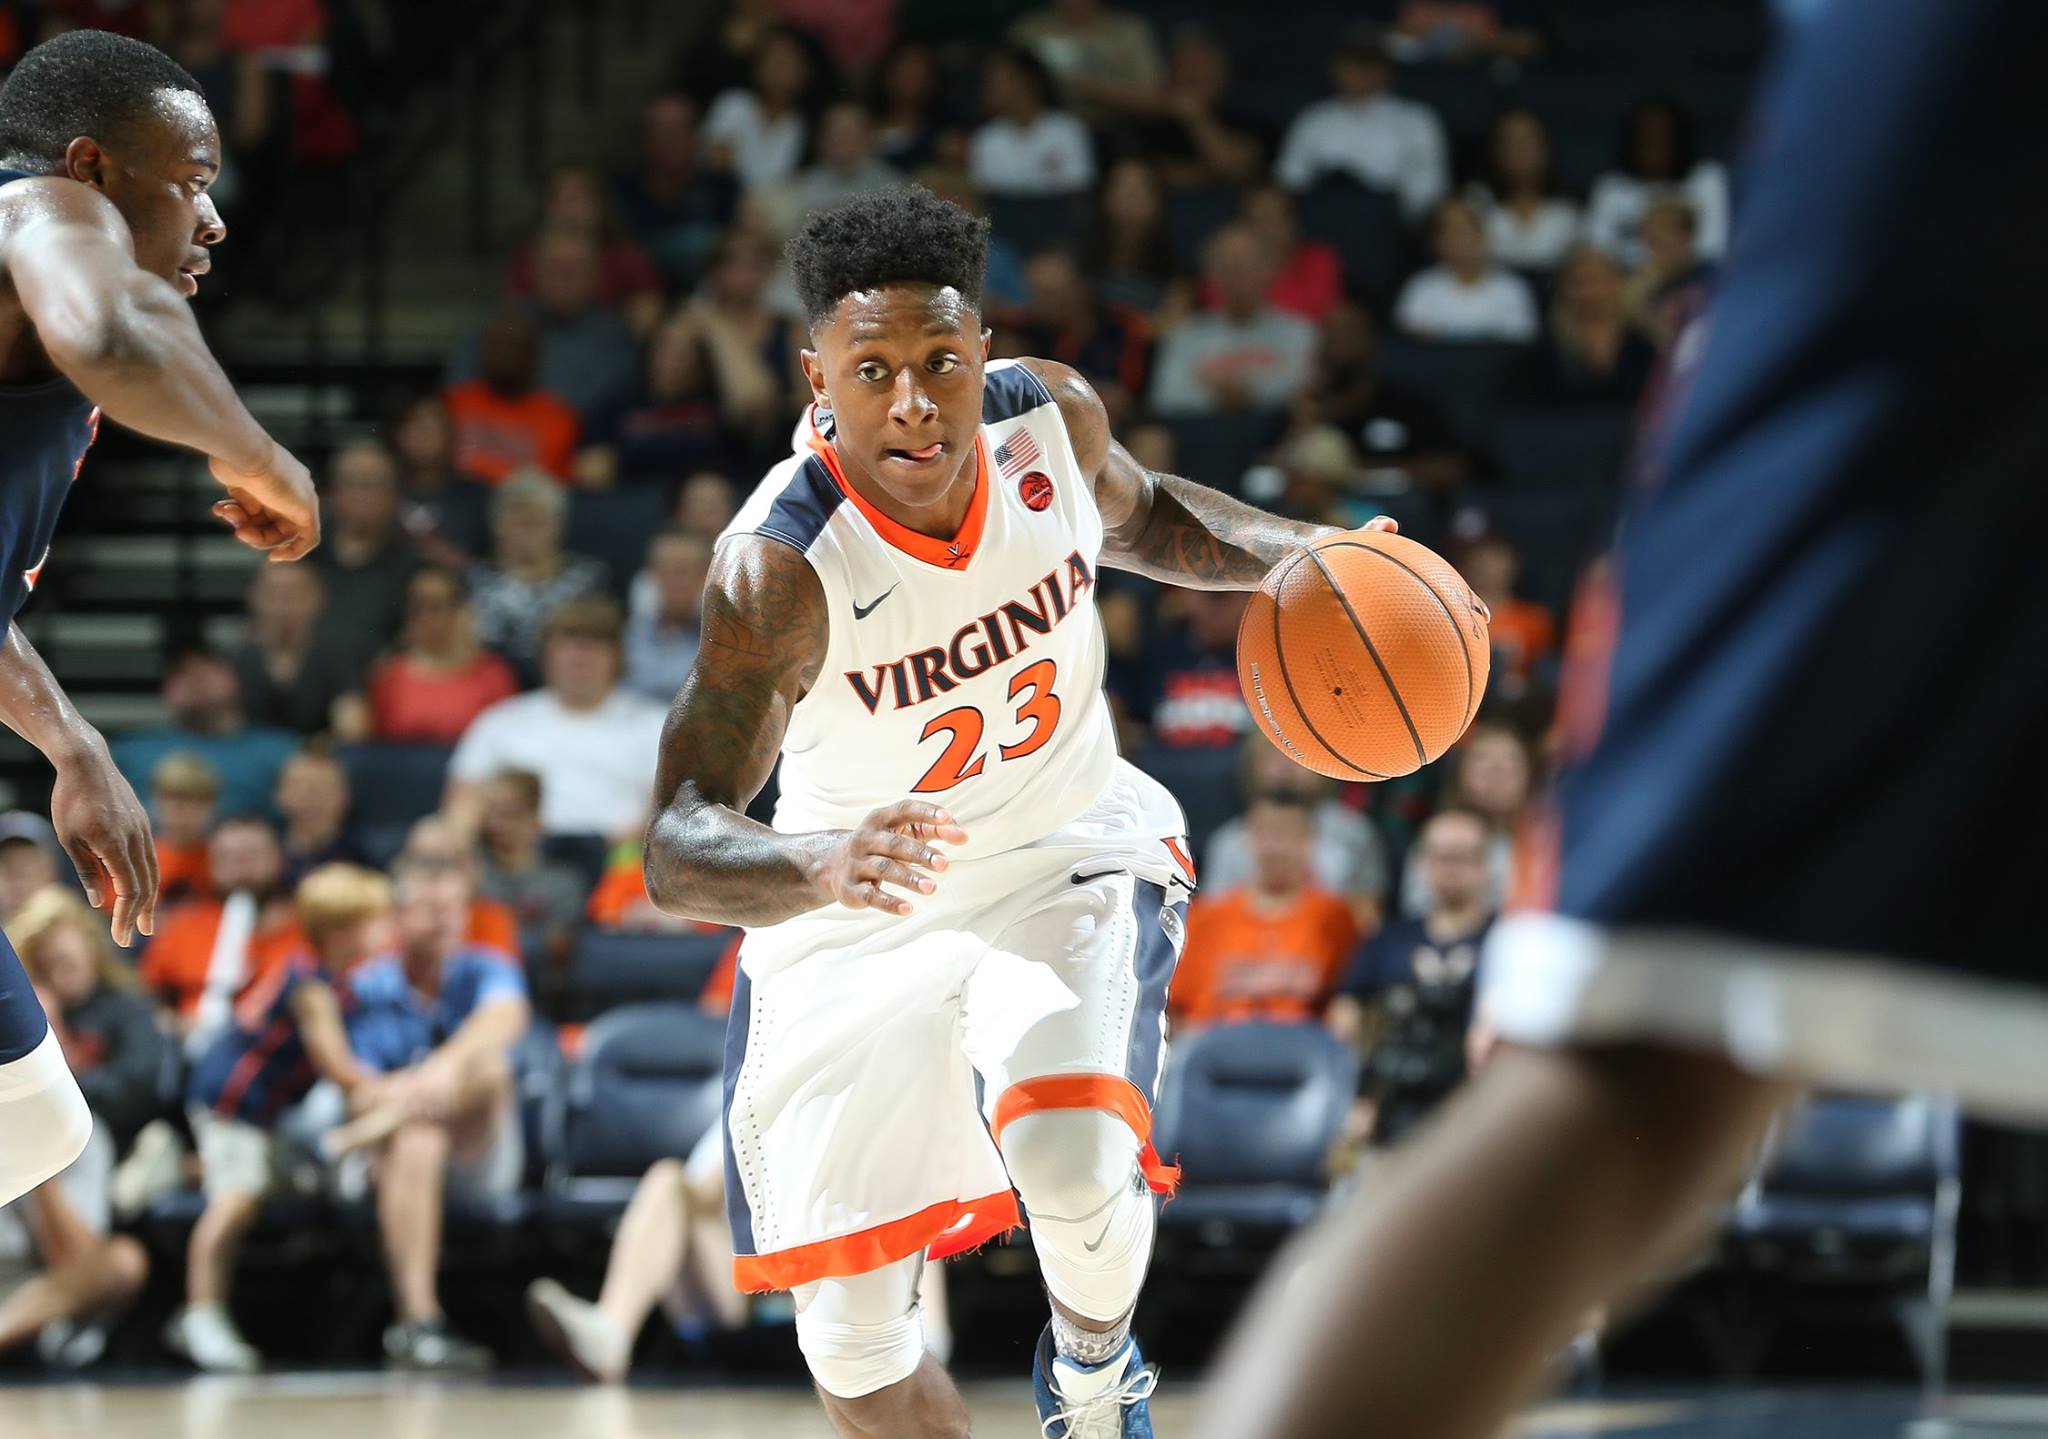 The Virginia basketball program has won an NCAA Tournament game in four straight seasons.